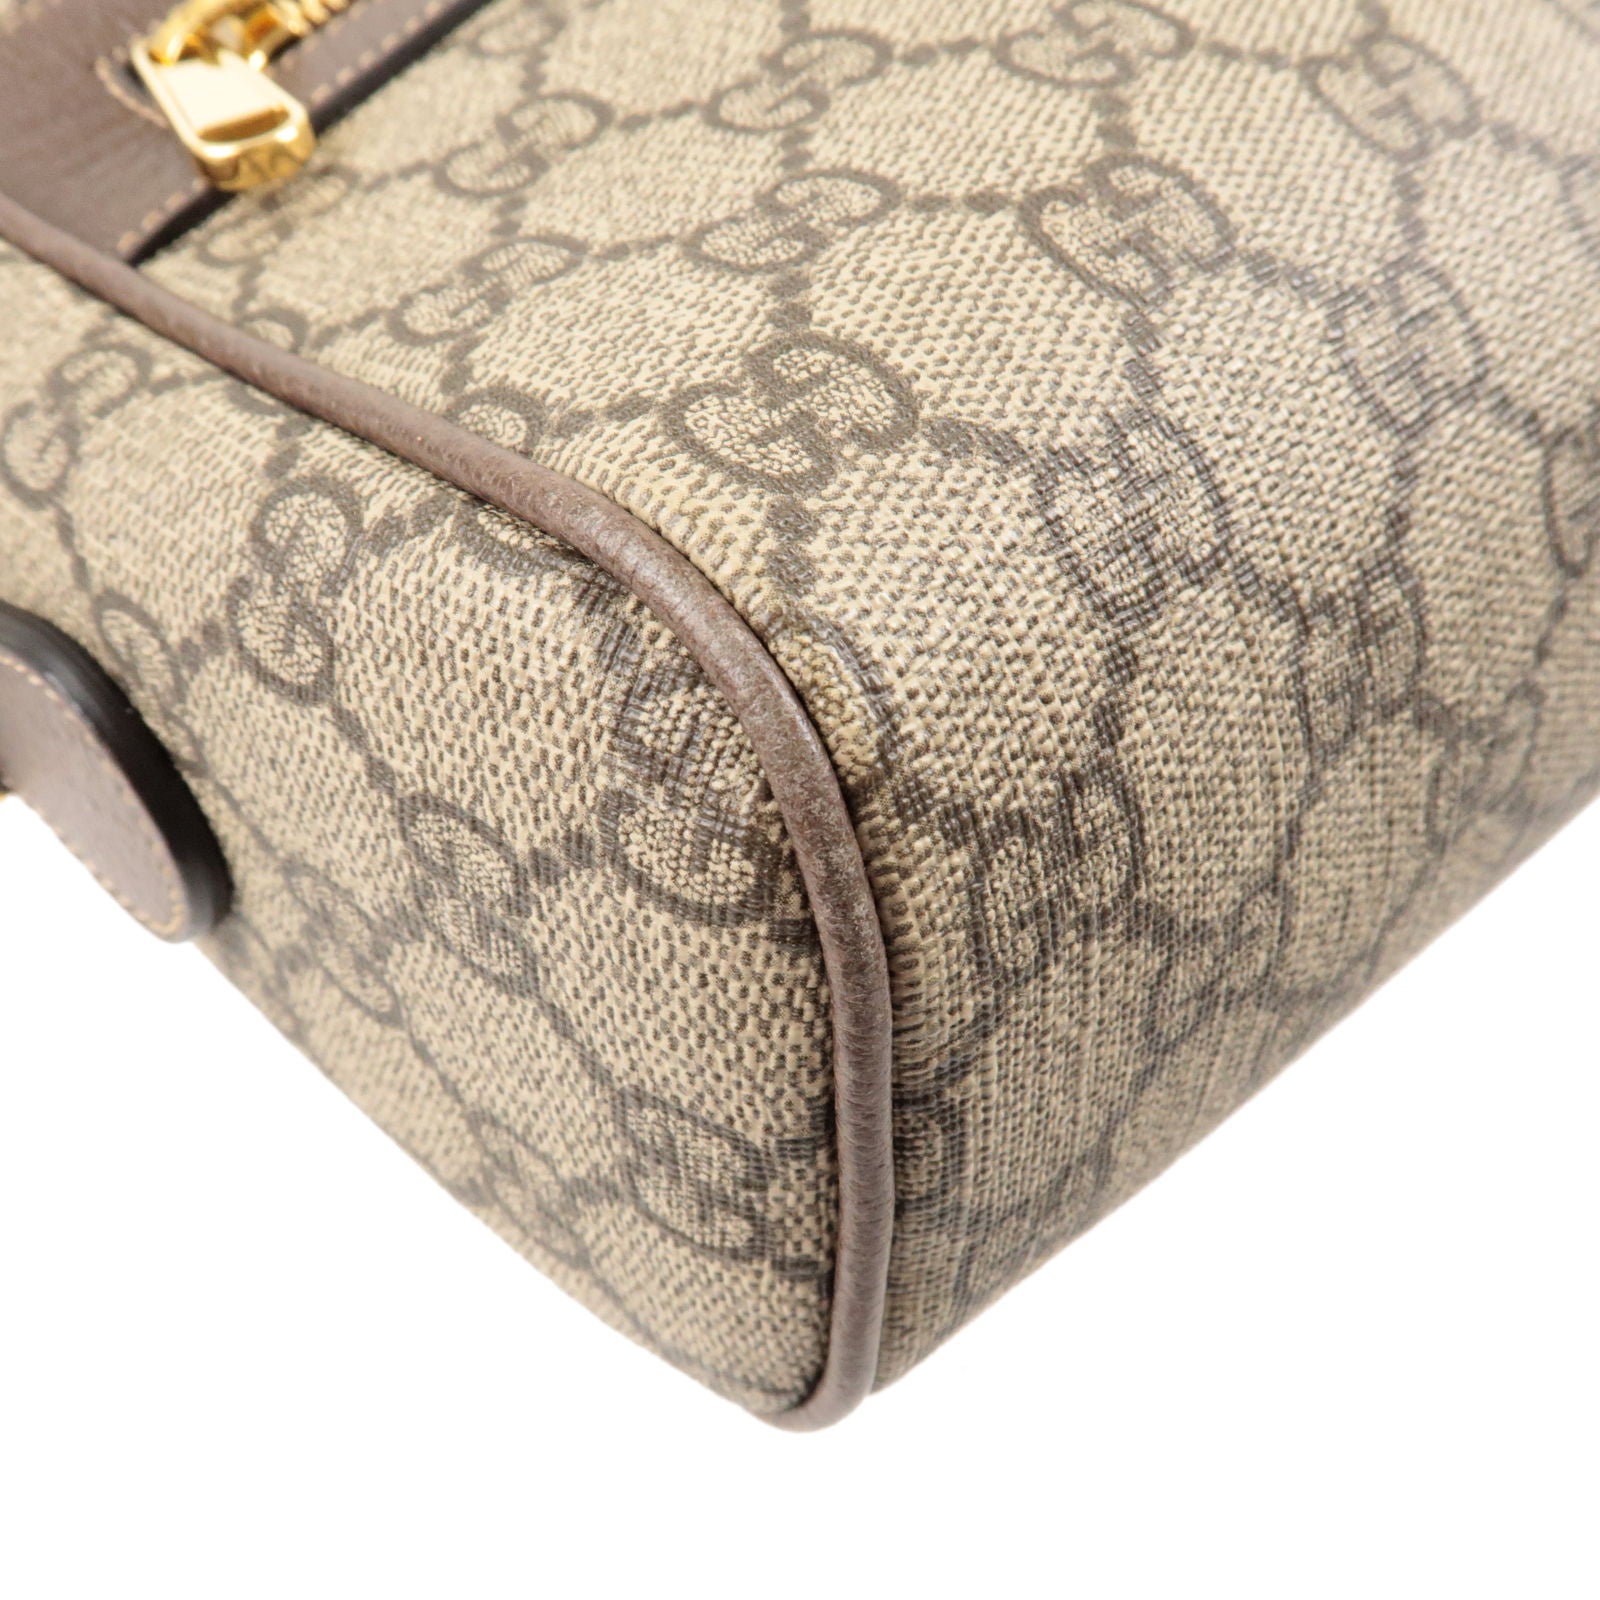 Ophidia gg supreme cloth satchel Gucci Beige in Cloth - 29854801